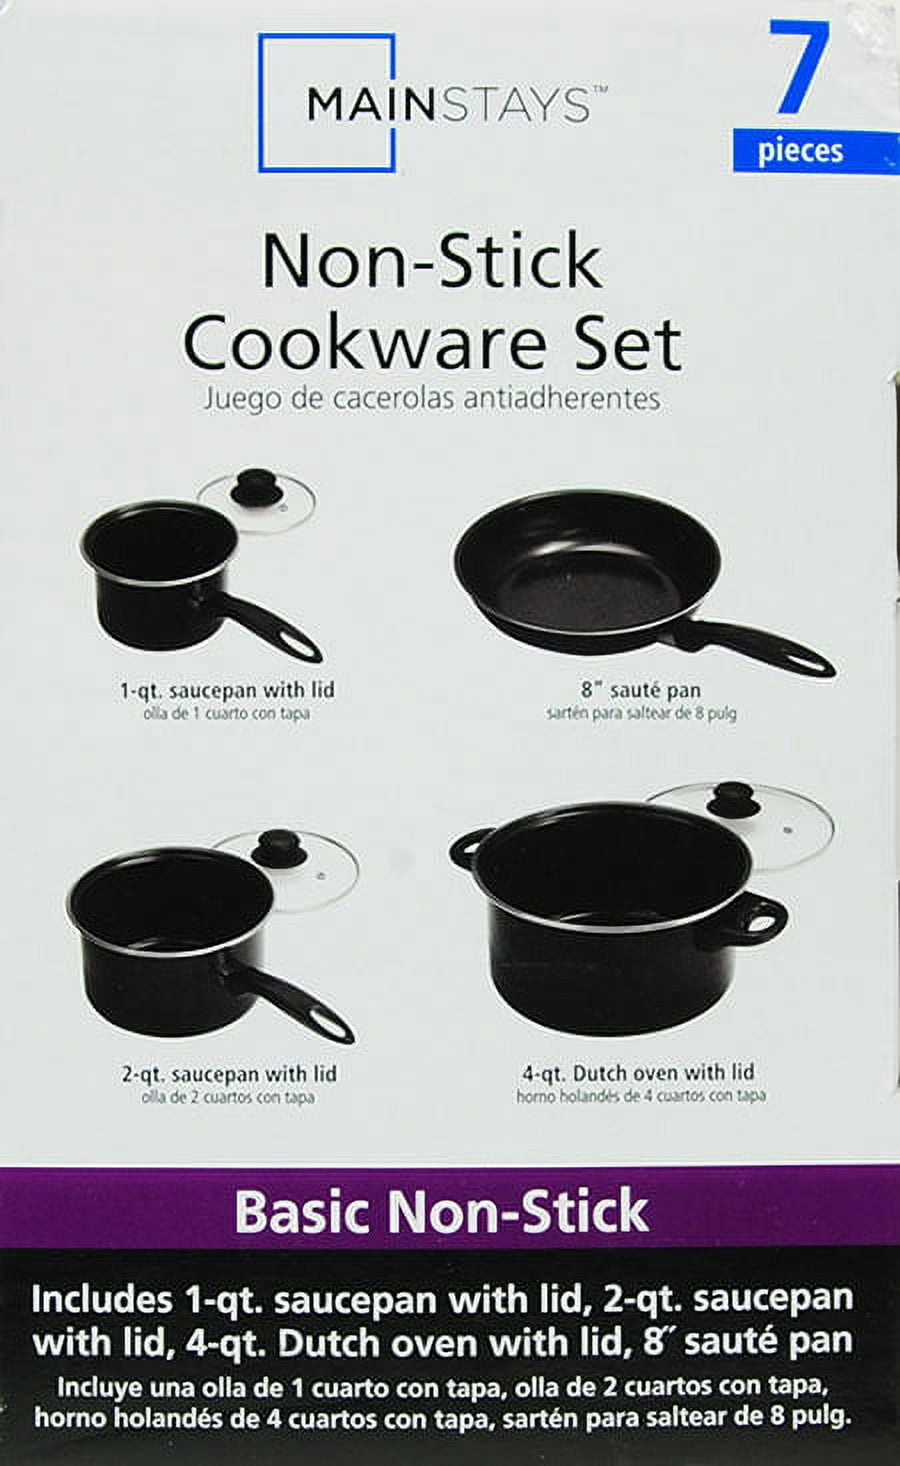 7 Piece Carbon Steel Nonstick Petite Cookware Set, Black, 7 PIECE SET -  Gerbes Super Markets